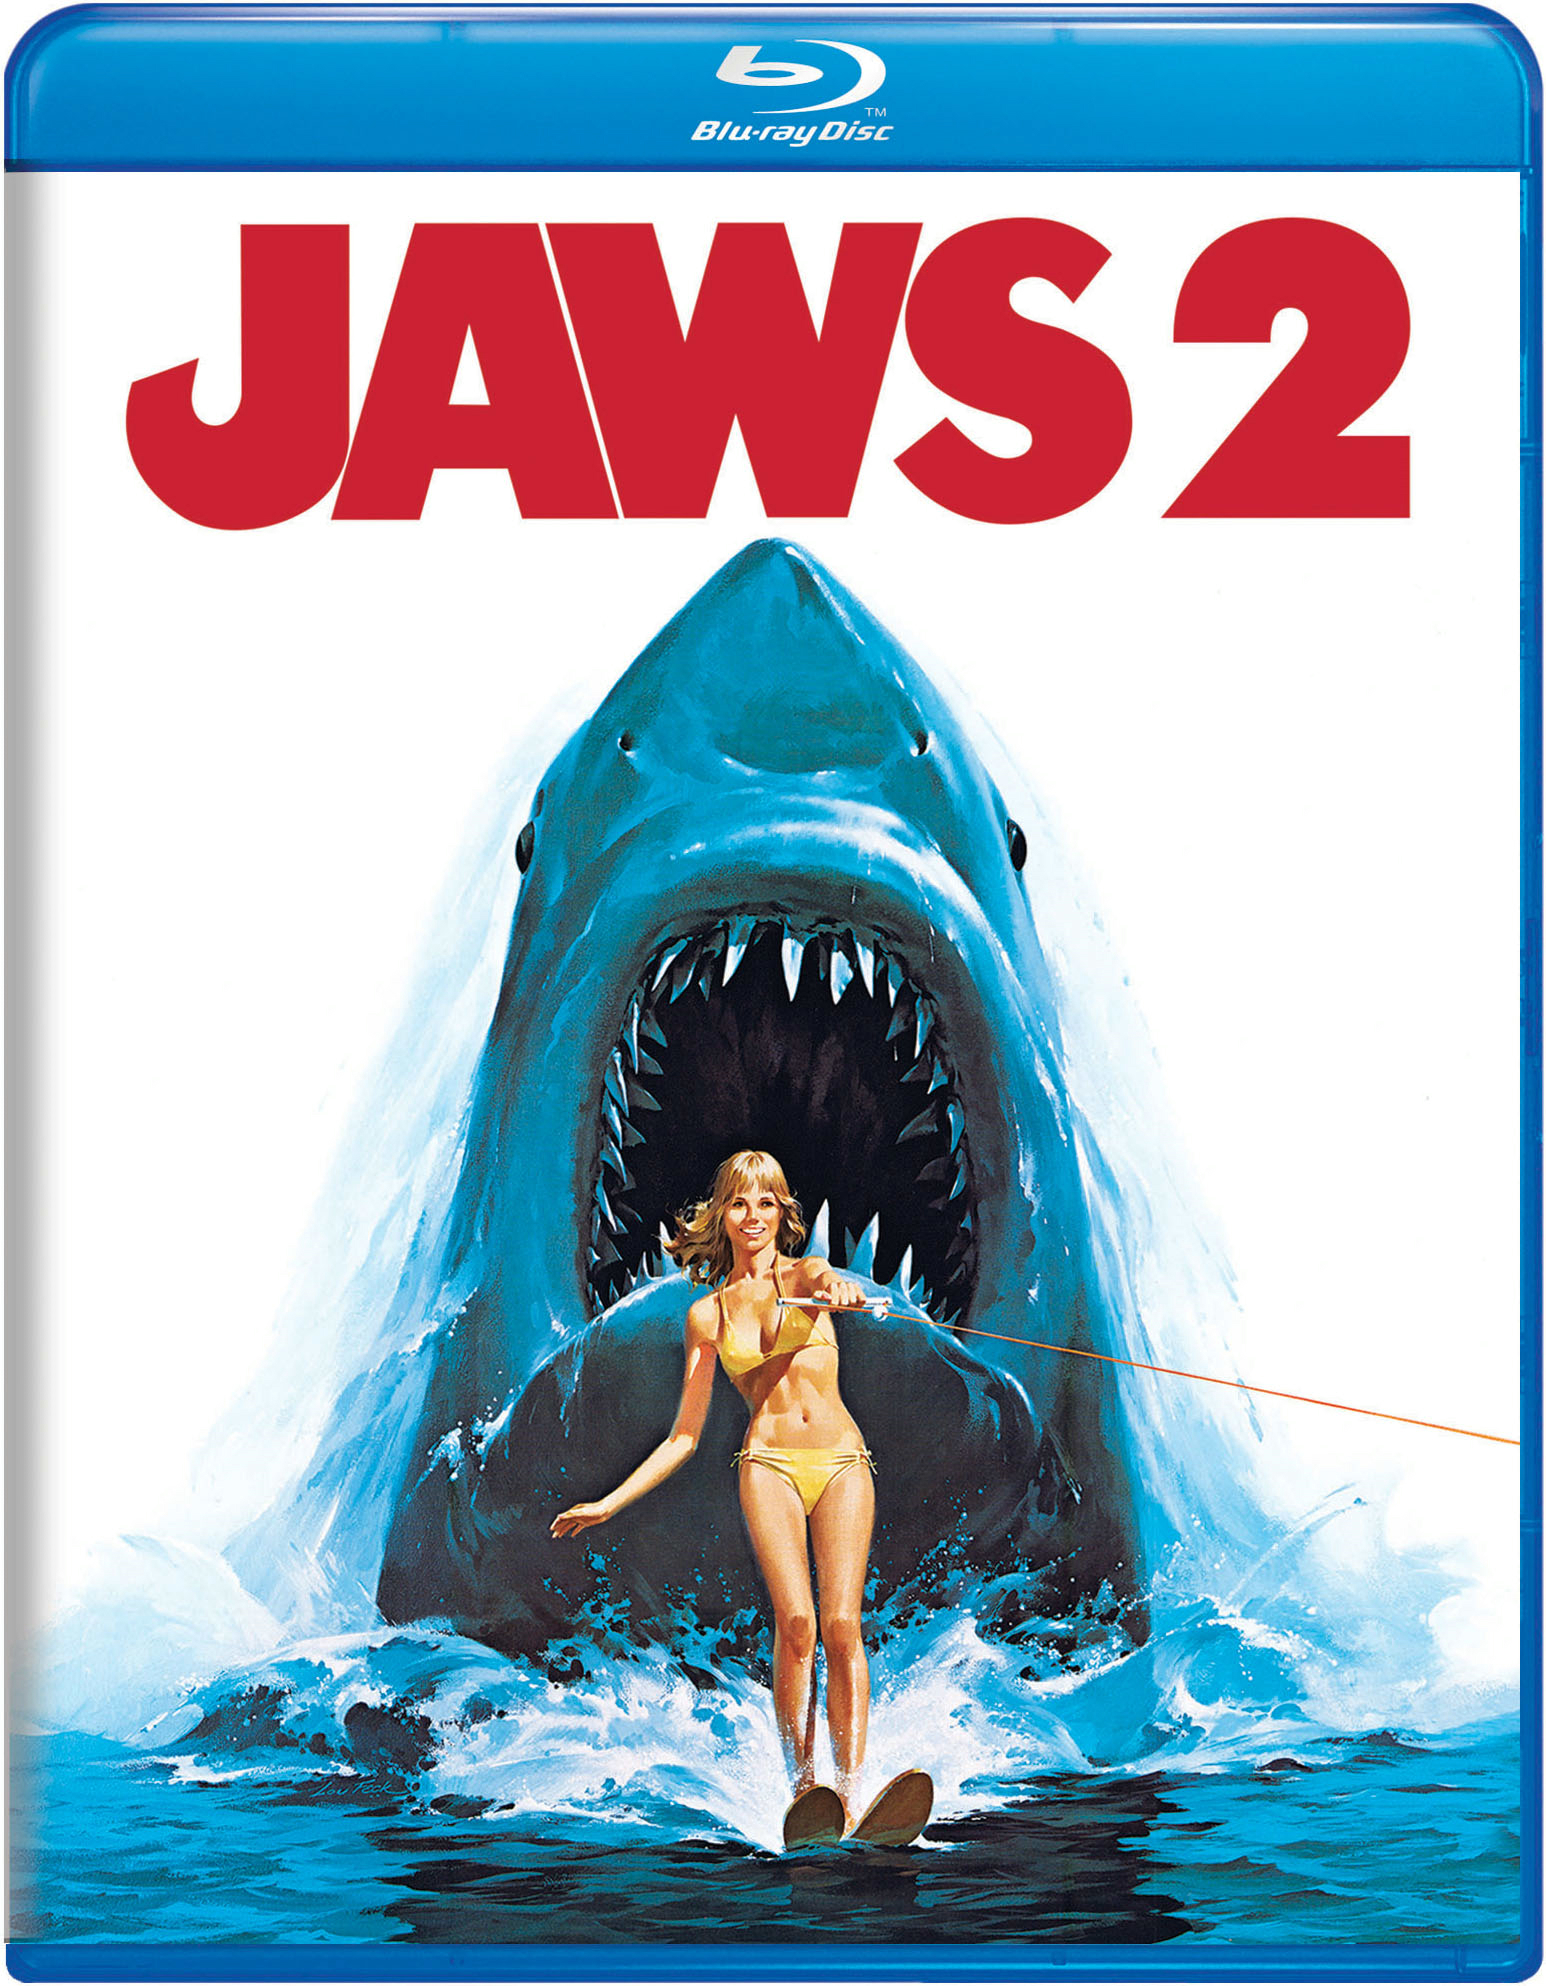 Jaws 2 - Blu-ray [ 1978 ]  - Thriller Movies On Blu-ray - Movies On GRUV